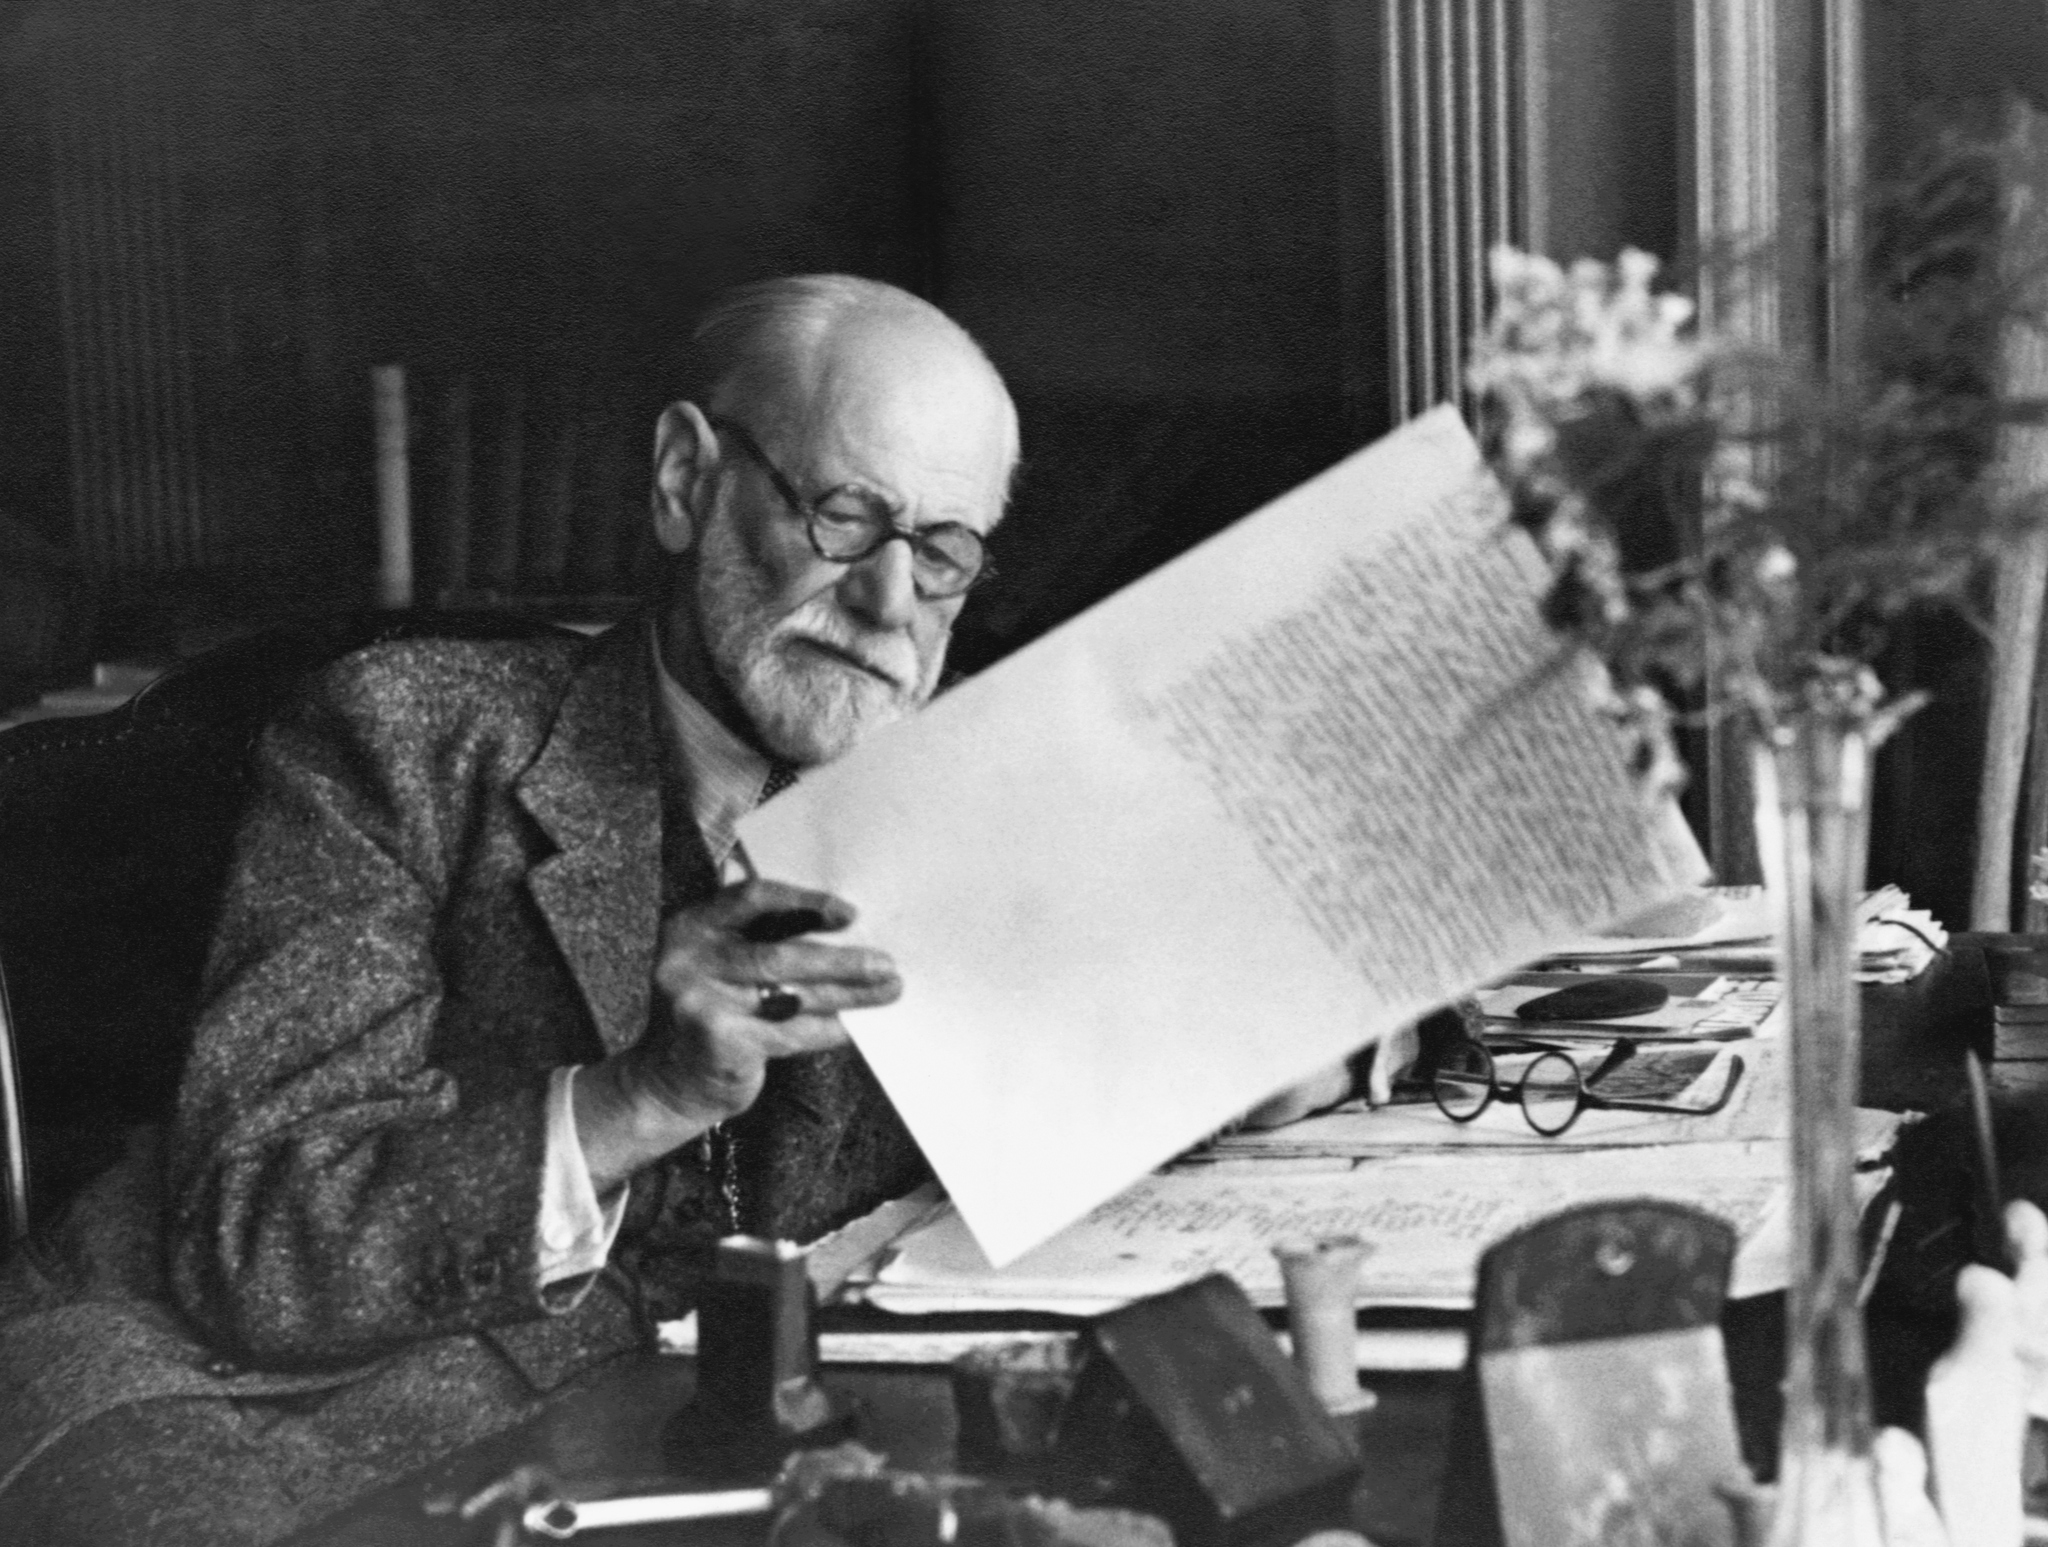 Sigmund Freud In Home Office At Desk